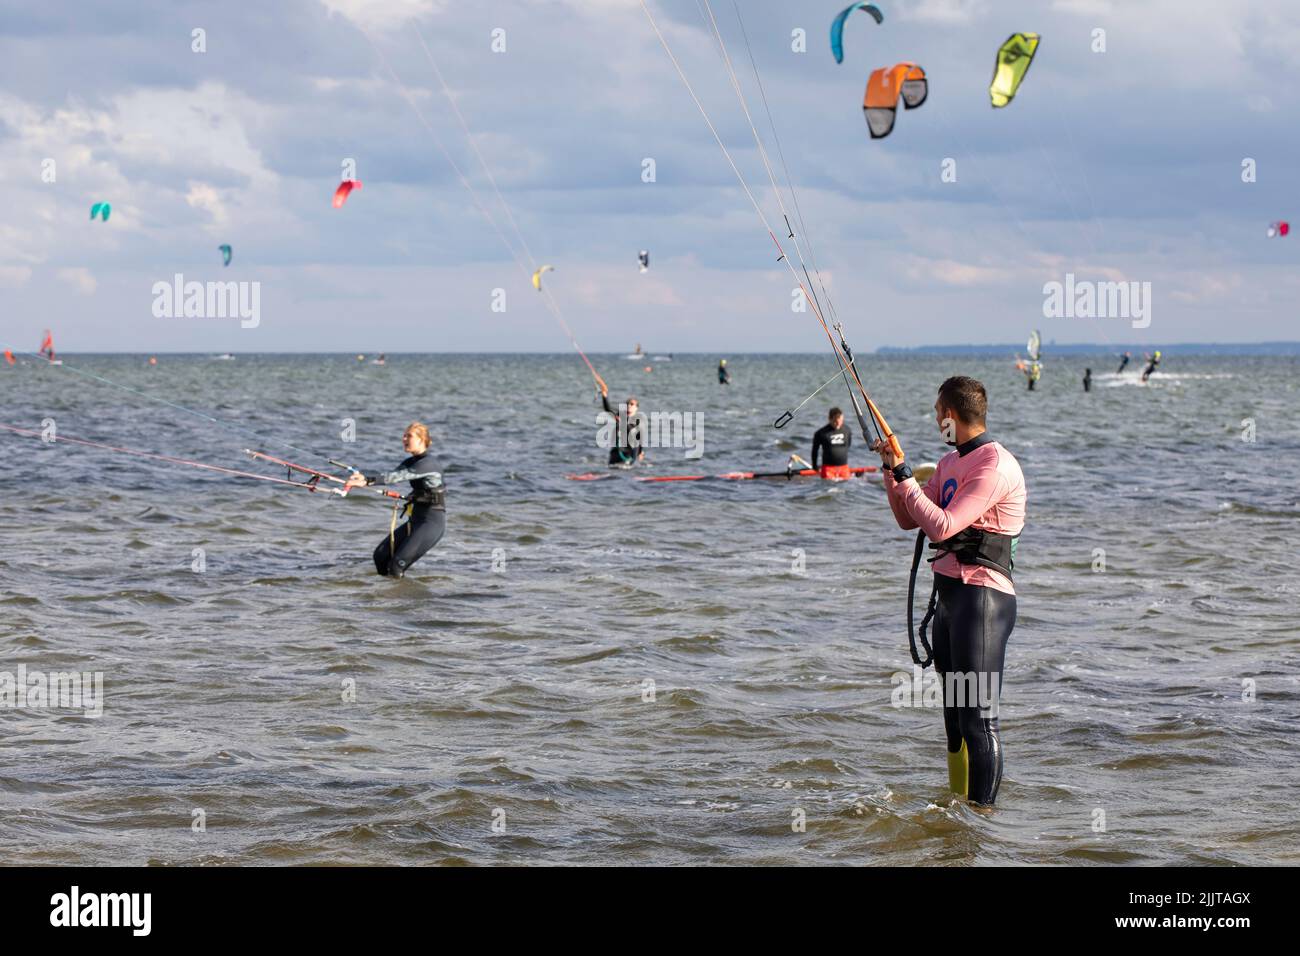 Kitesurfen, Himmel voller Drachen, Kitesurfer, Golf von Danzig, Hel Peninsula, Polen. Stockfoto